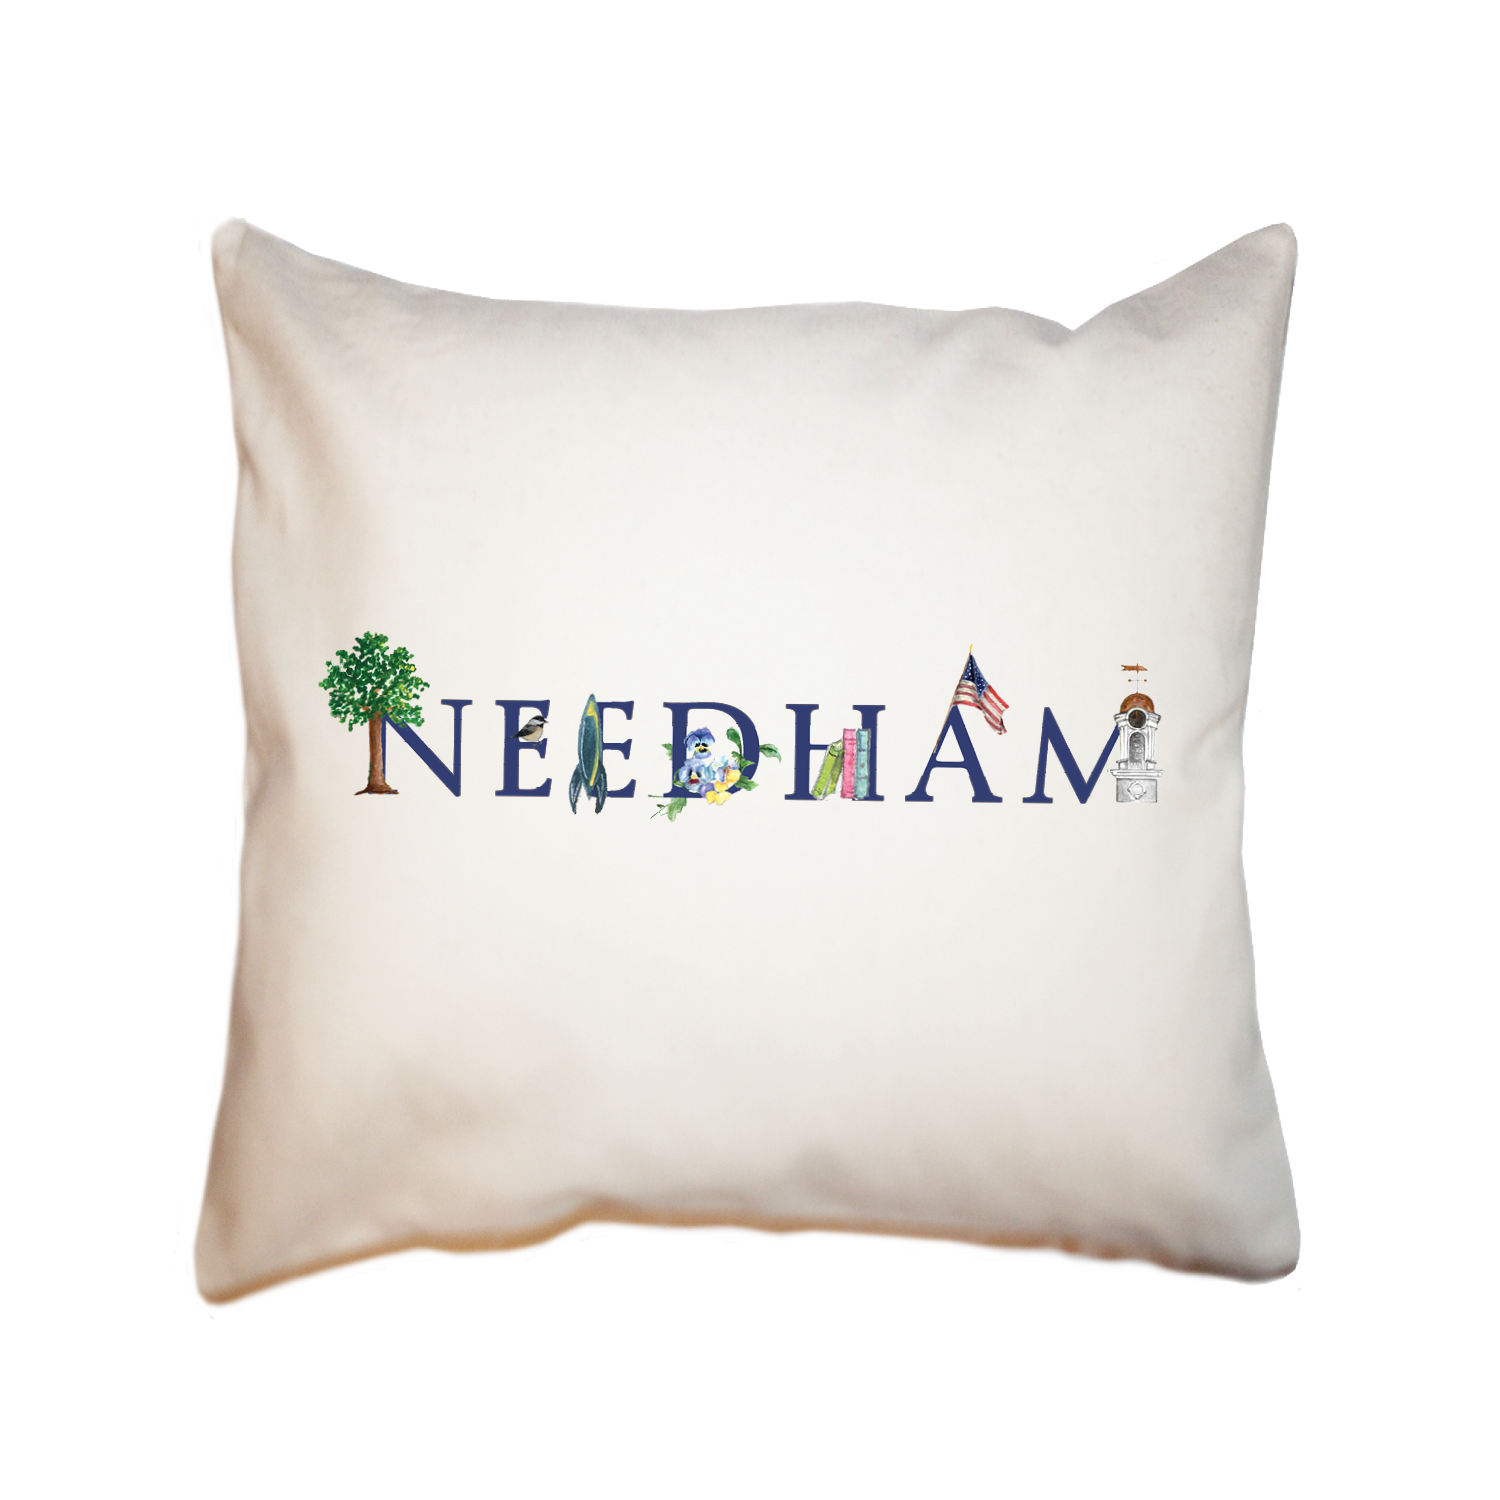 needham square pillow